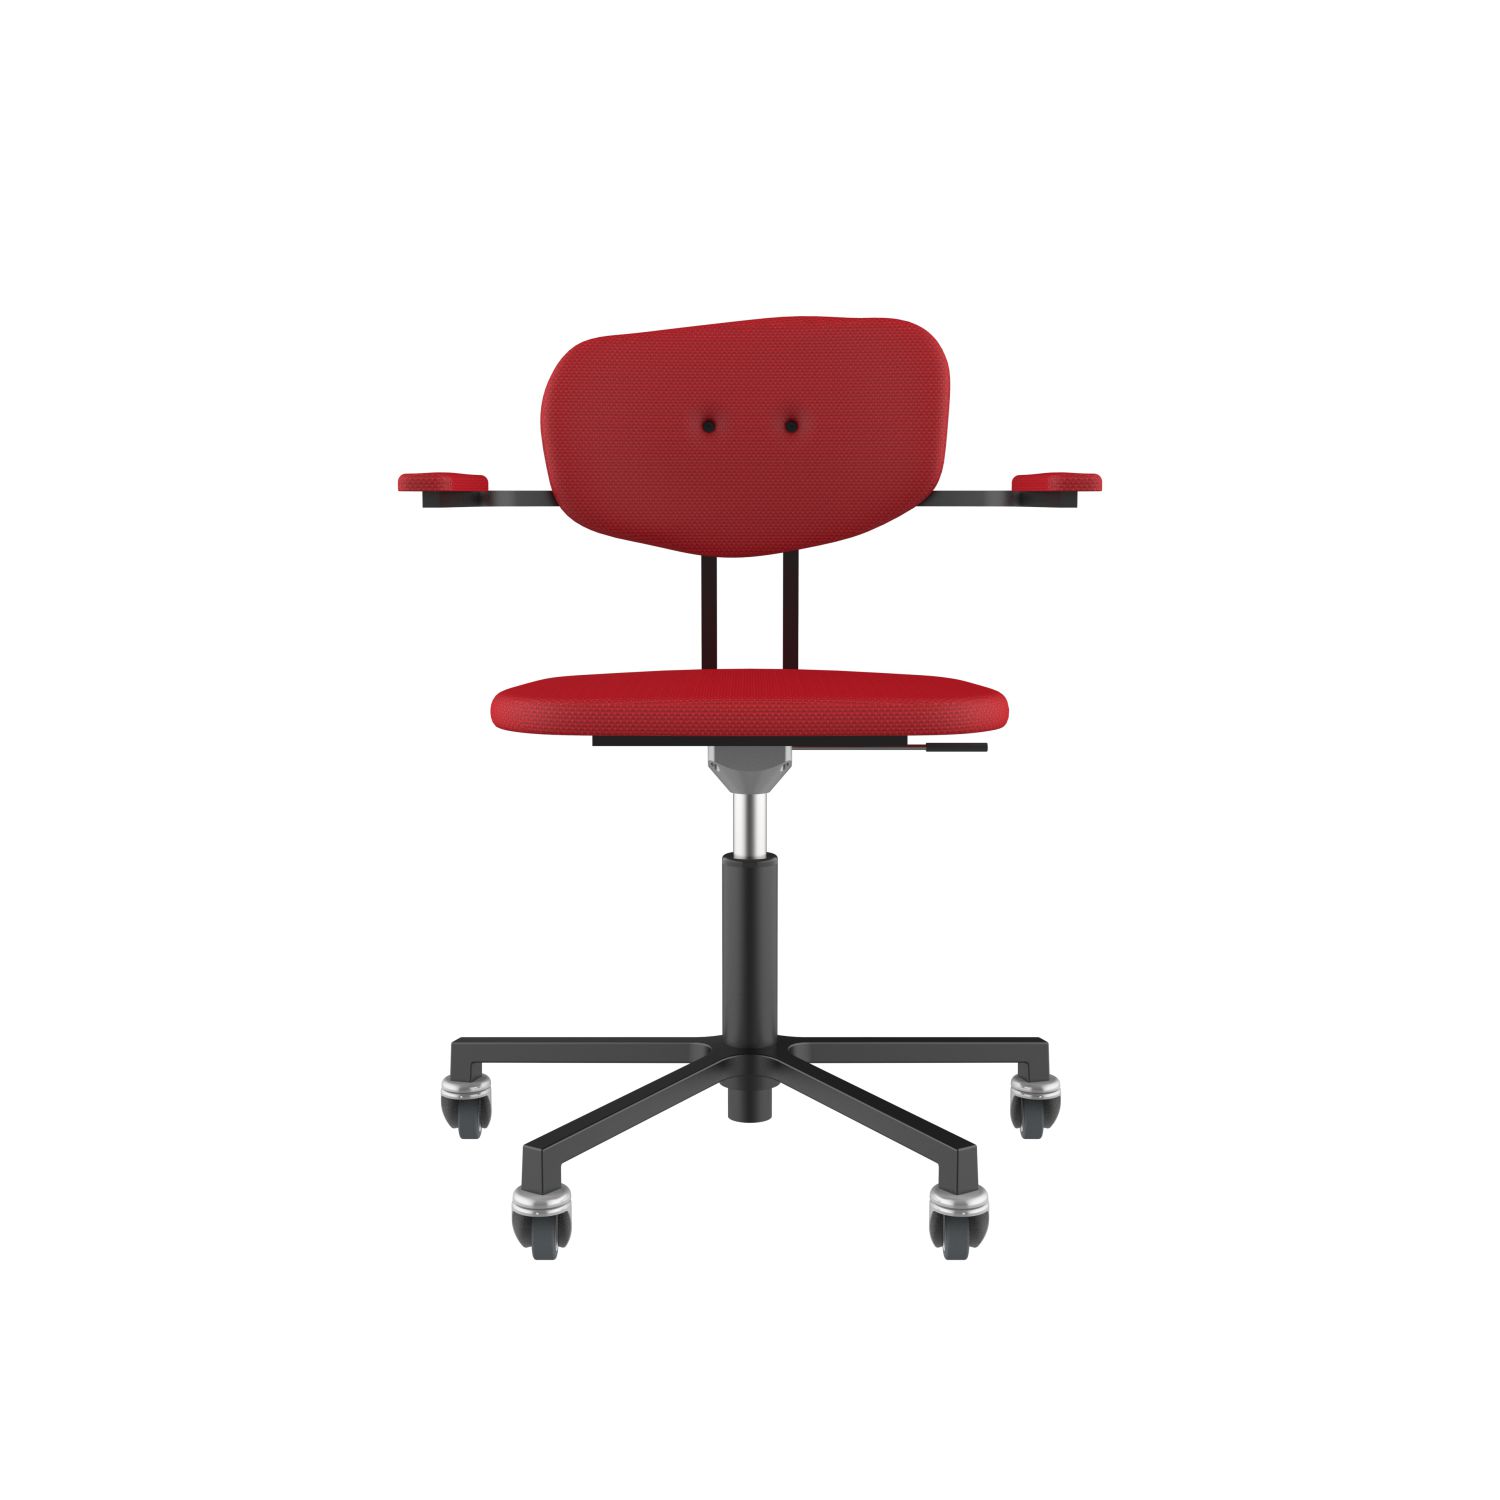 lensvelt maarten baas office chair with armrests backrest c grenada red 010 black ral9005 soft wheels